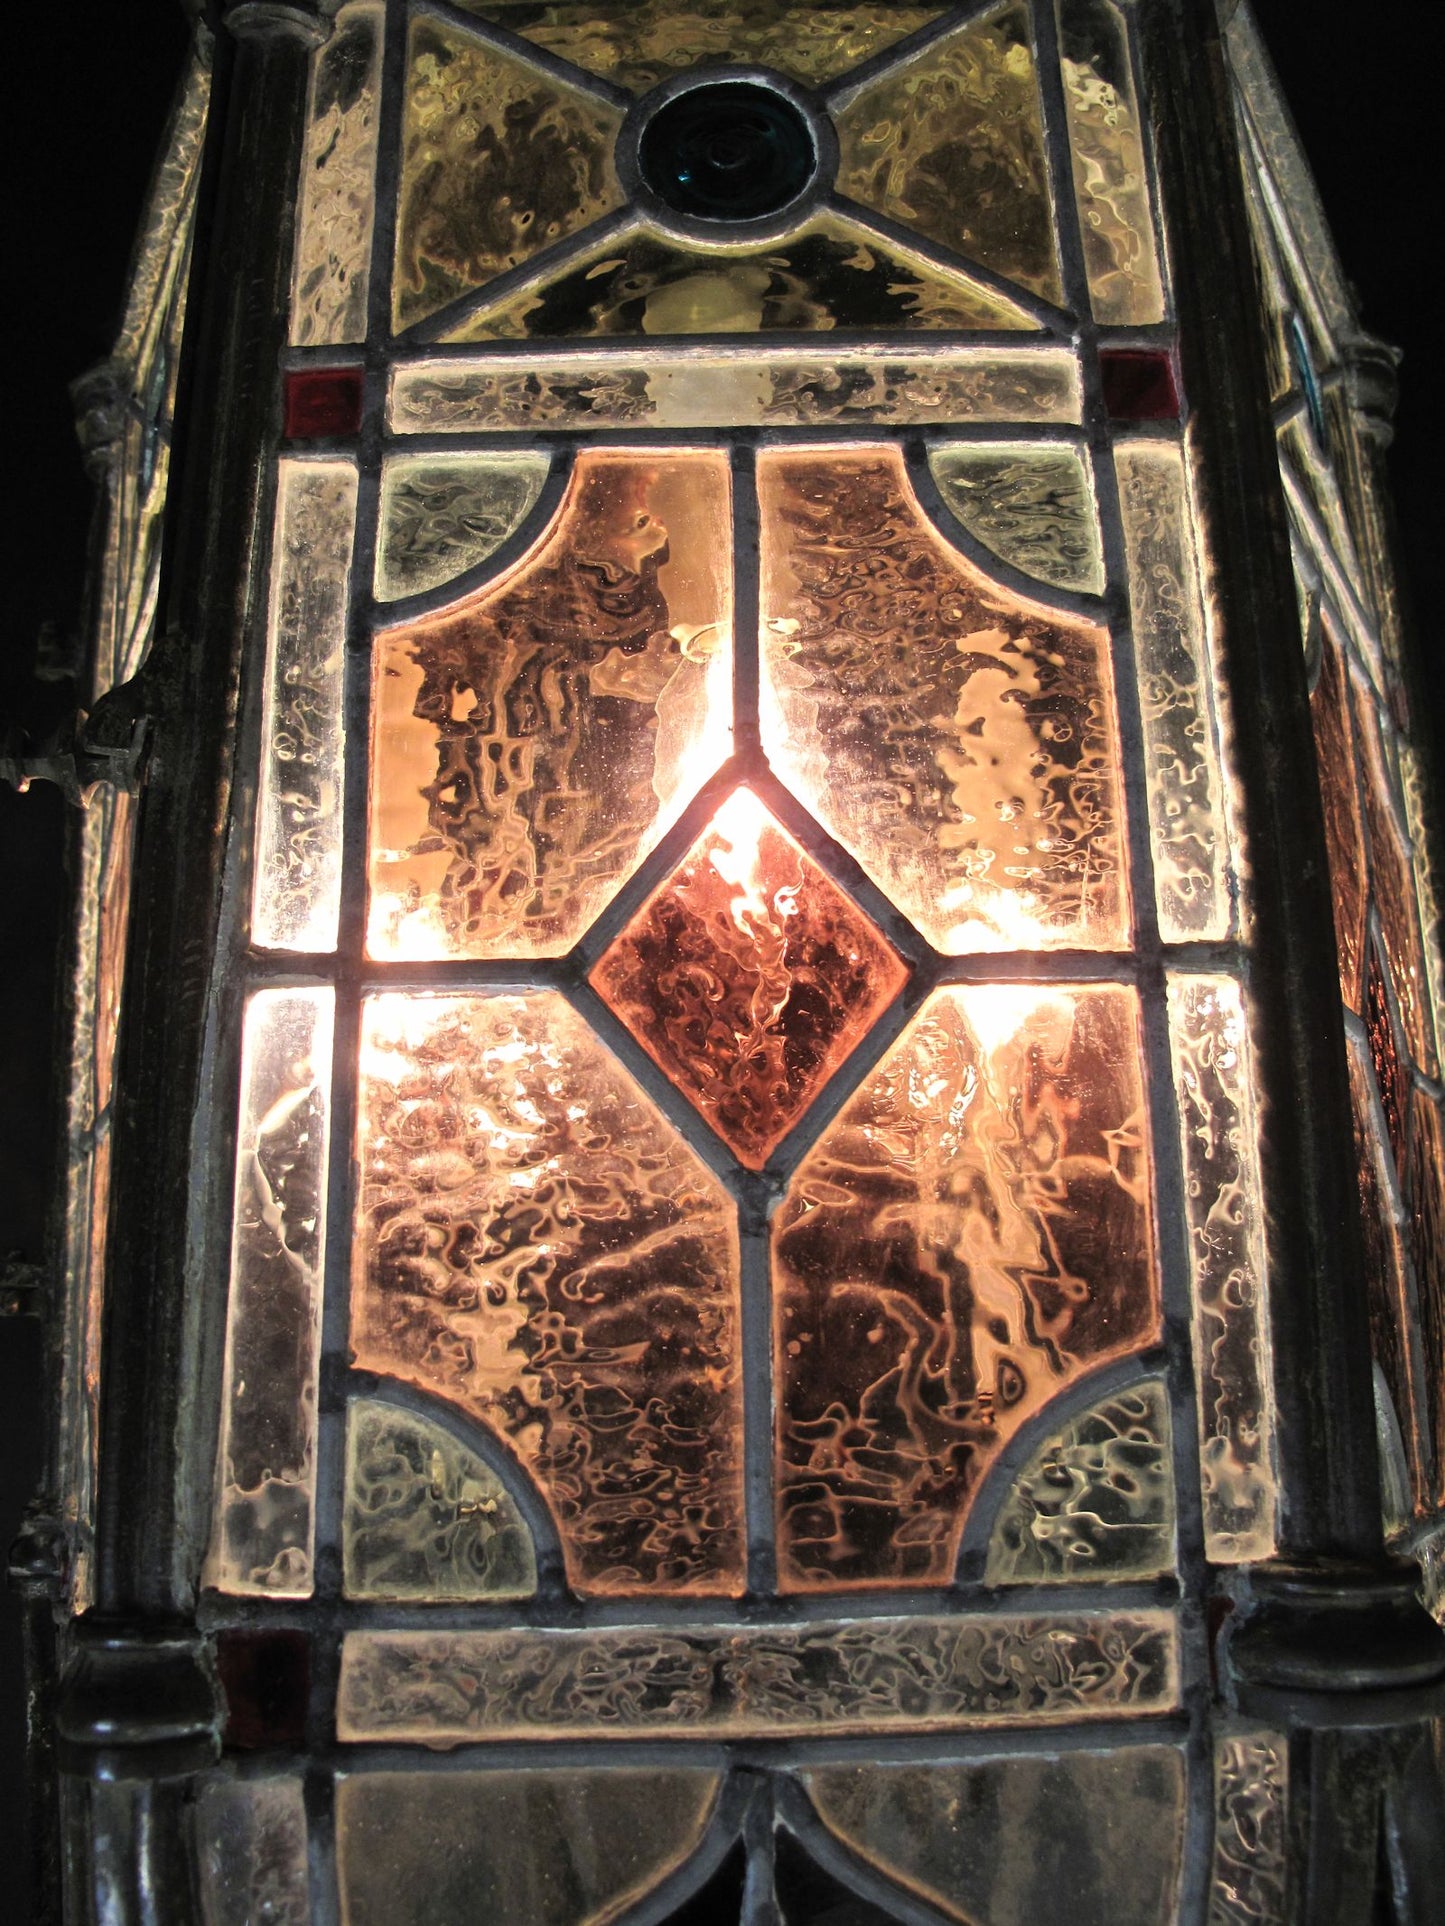 view from below showing lantern lit